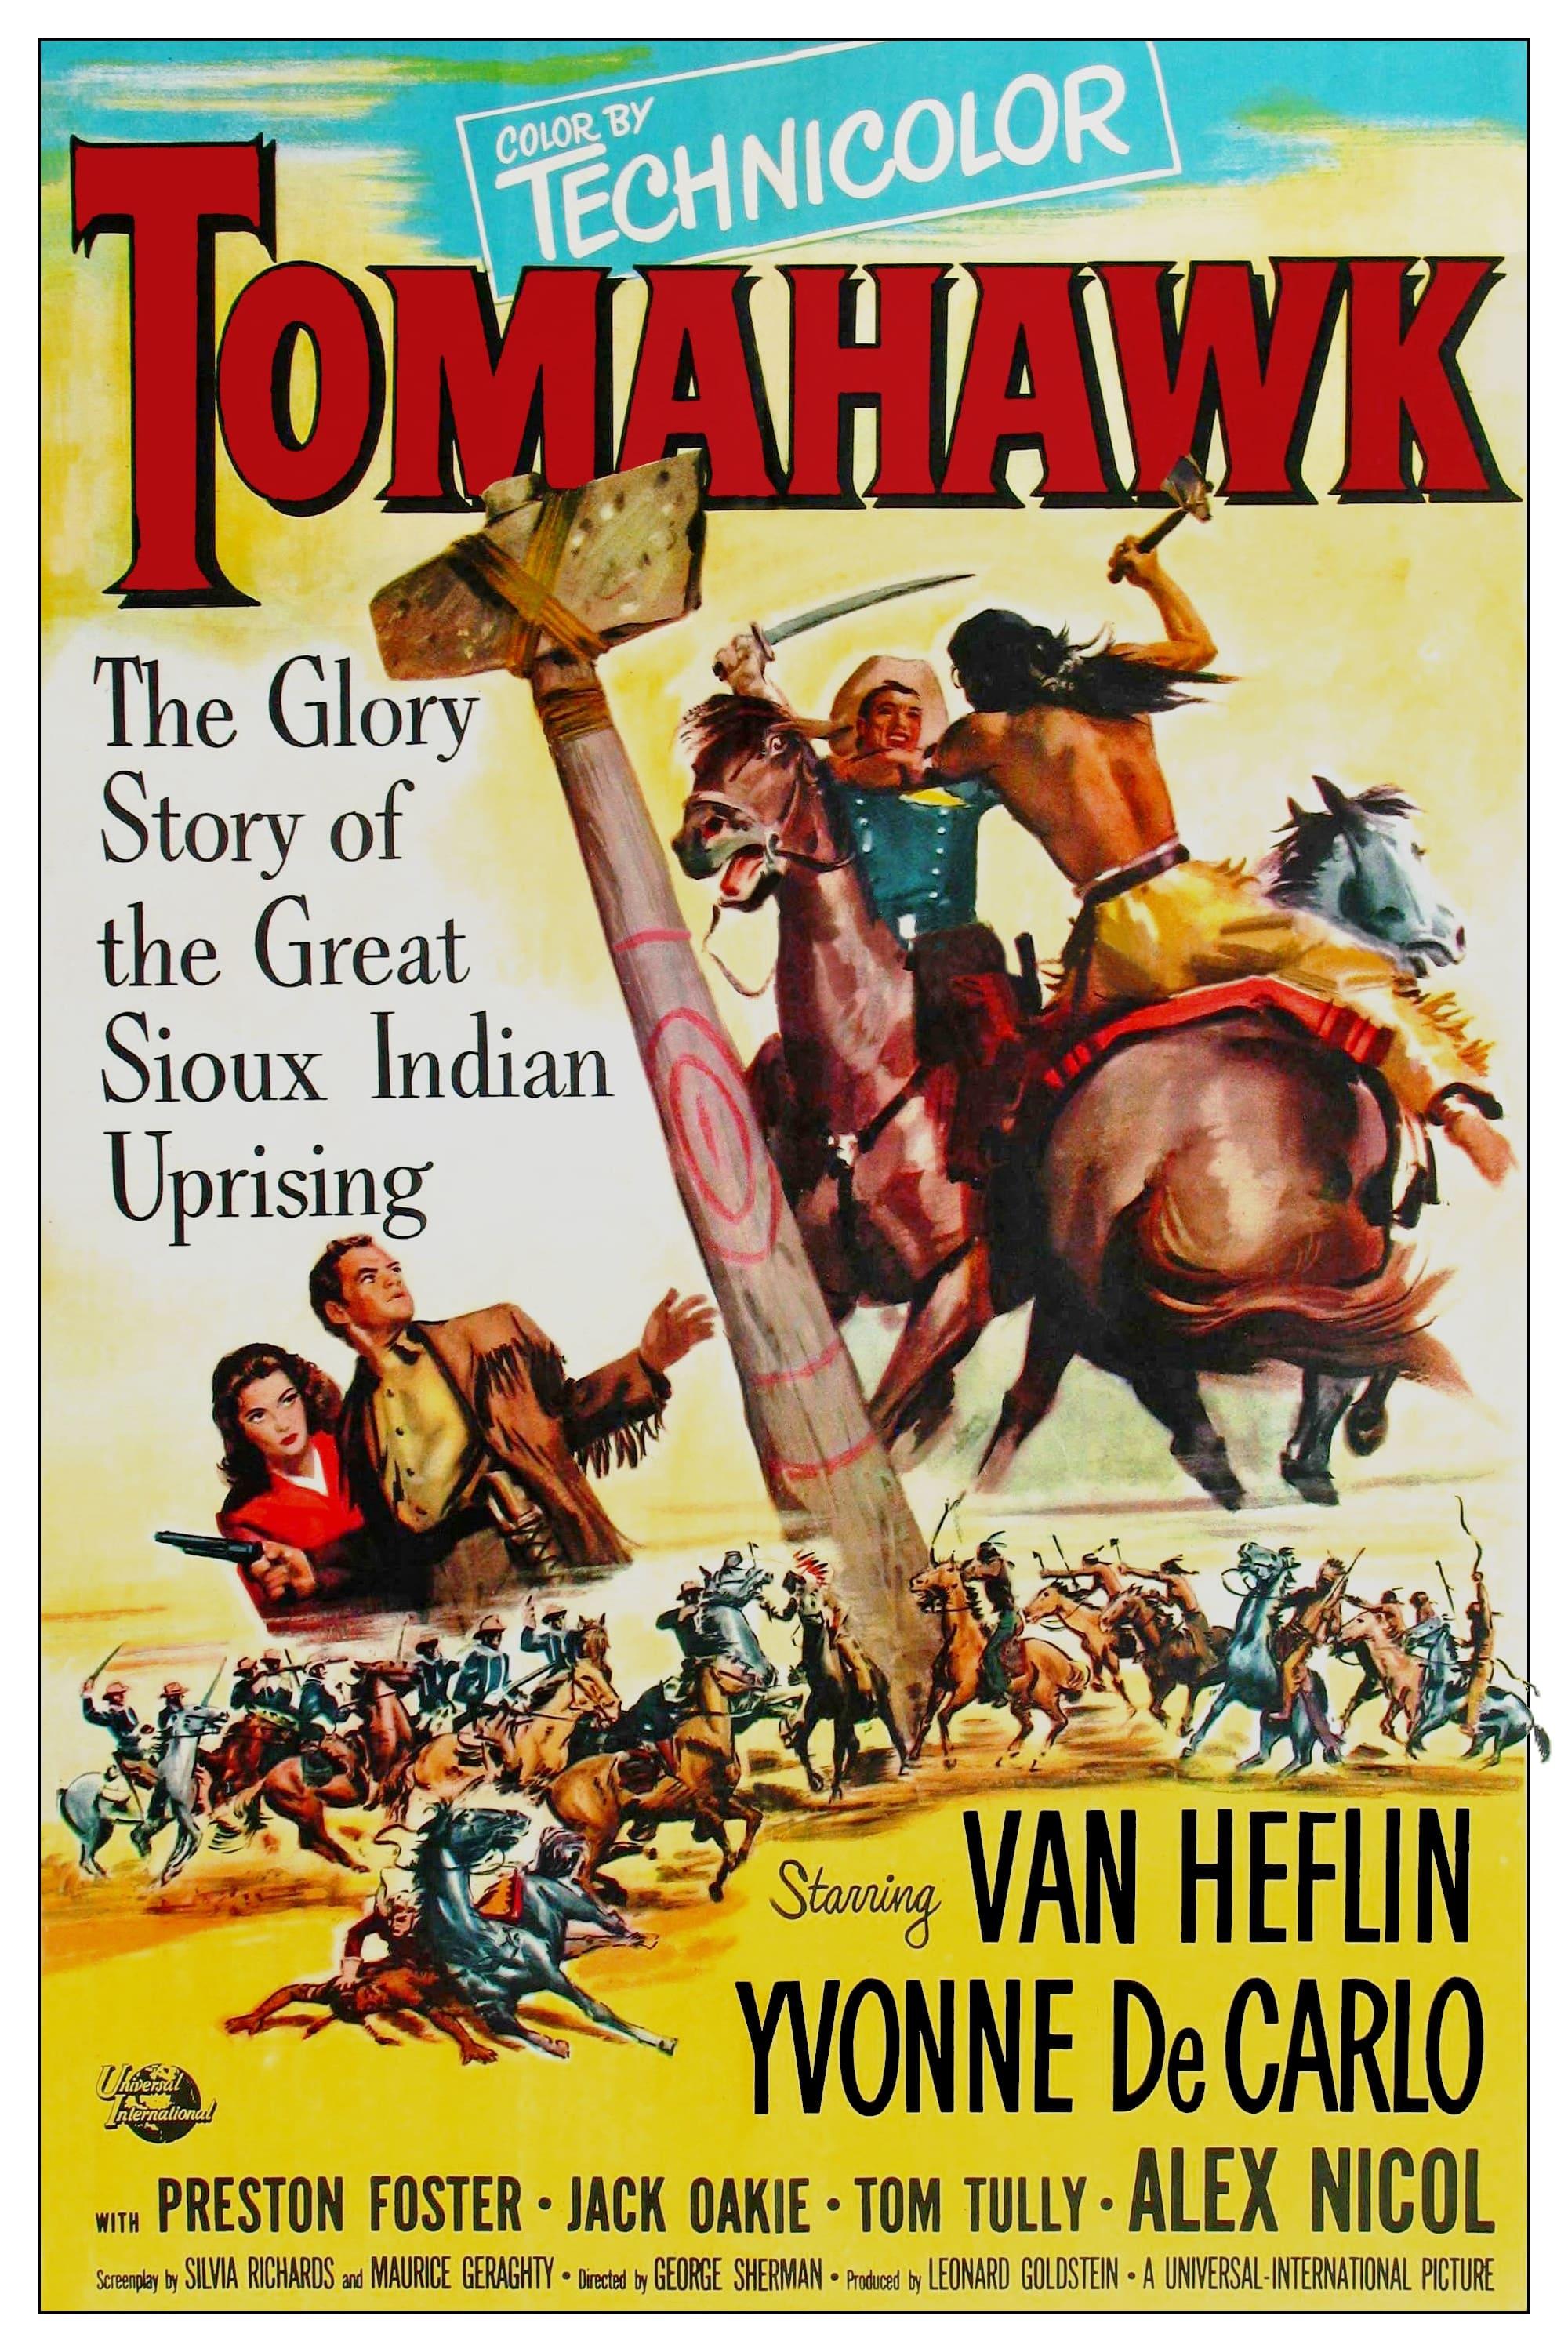 Tomahawk poster